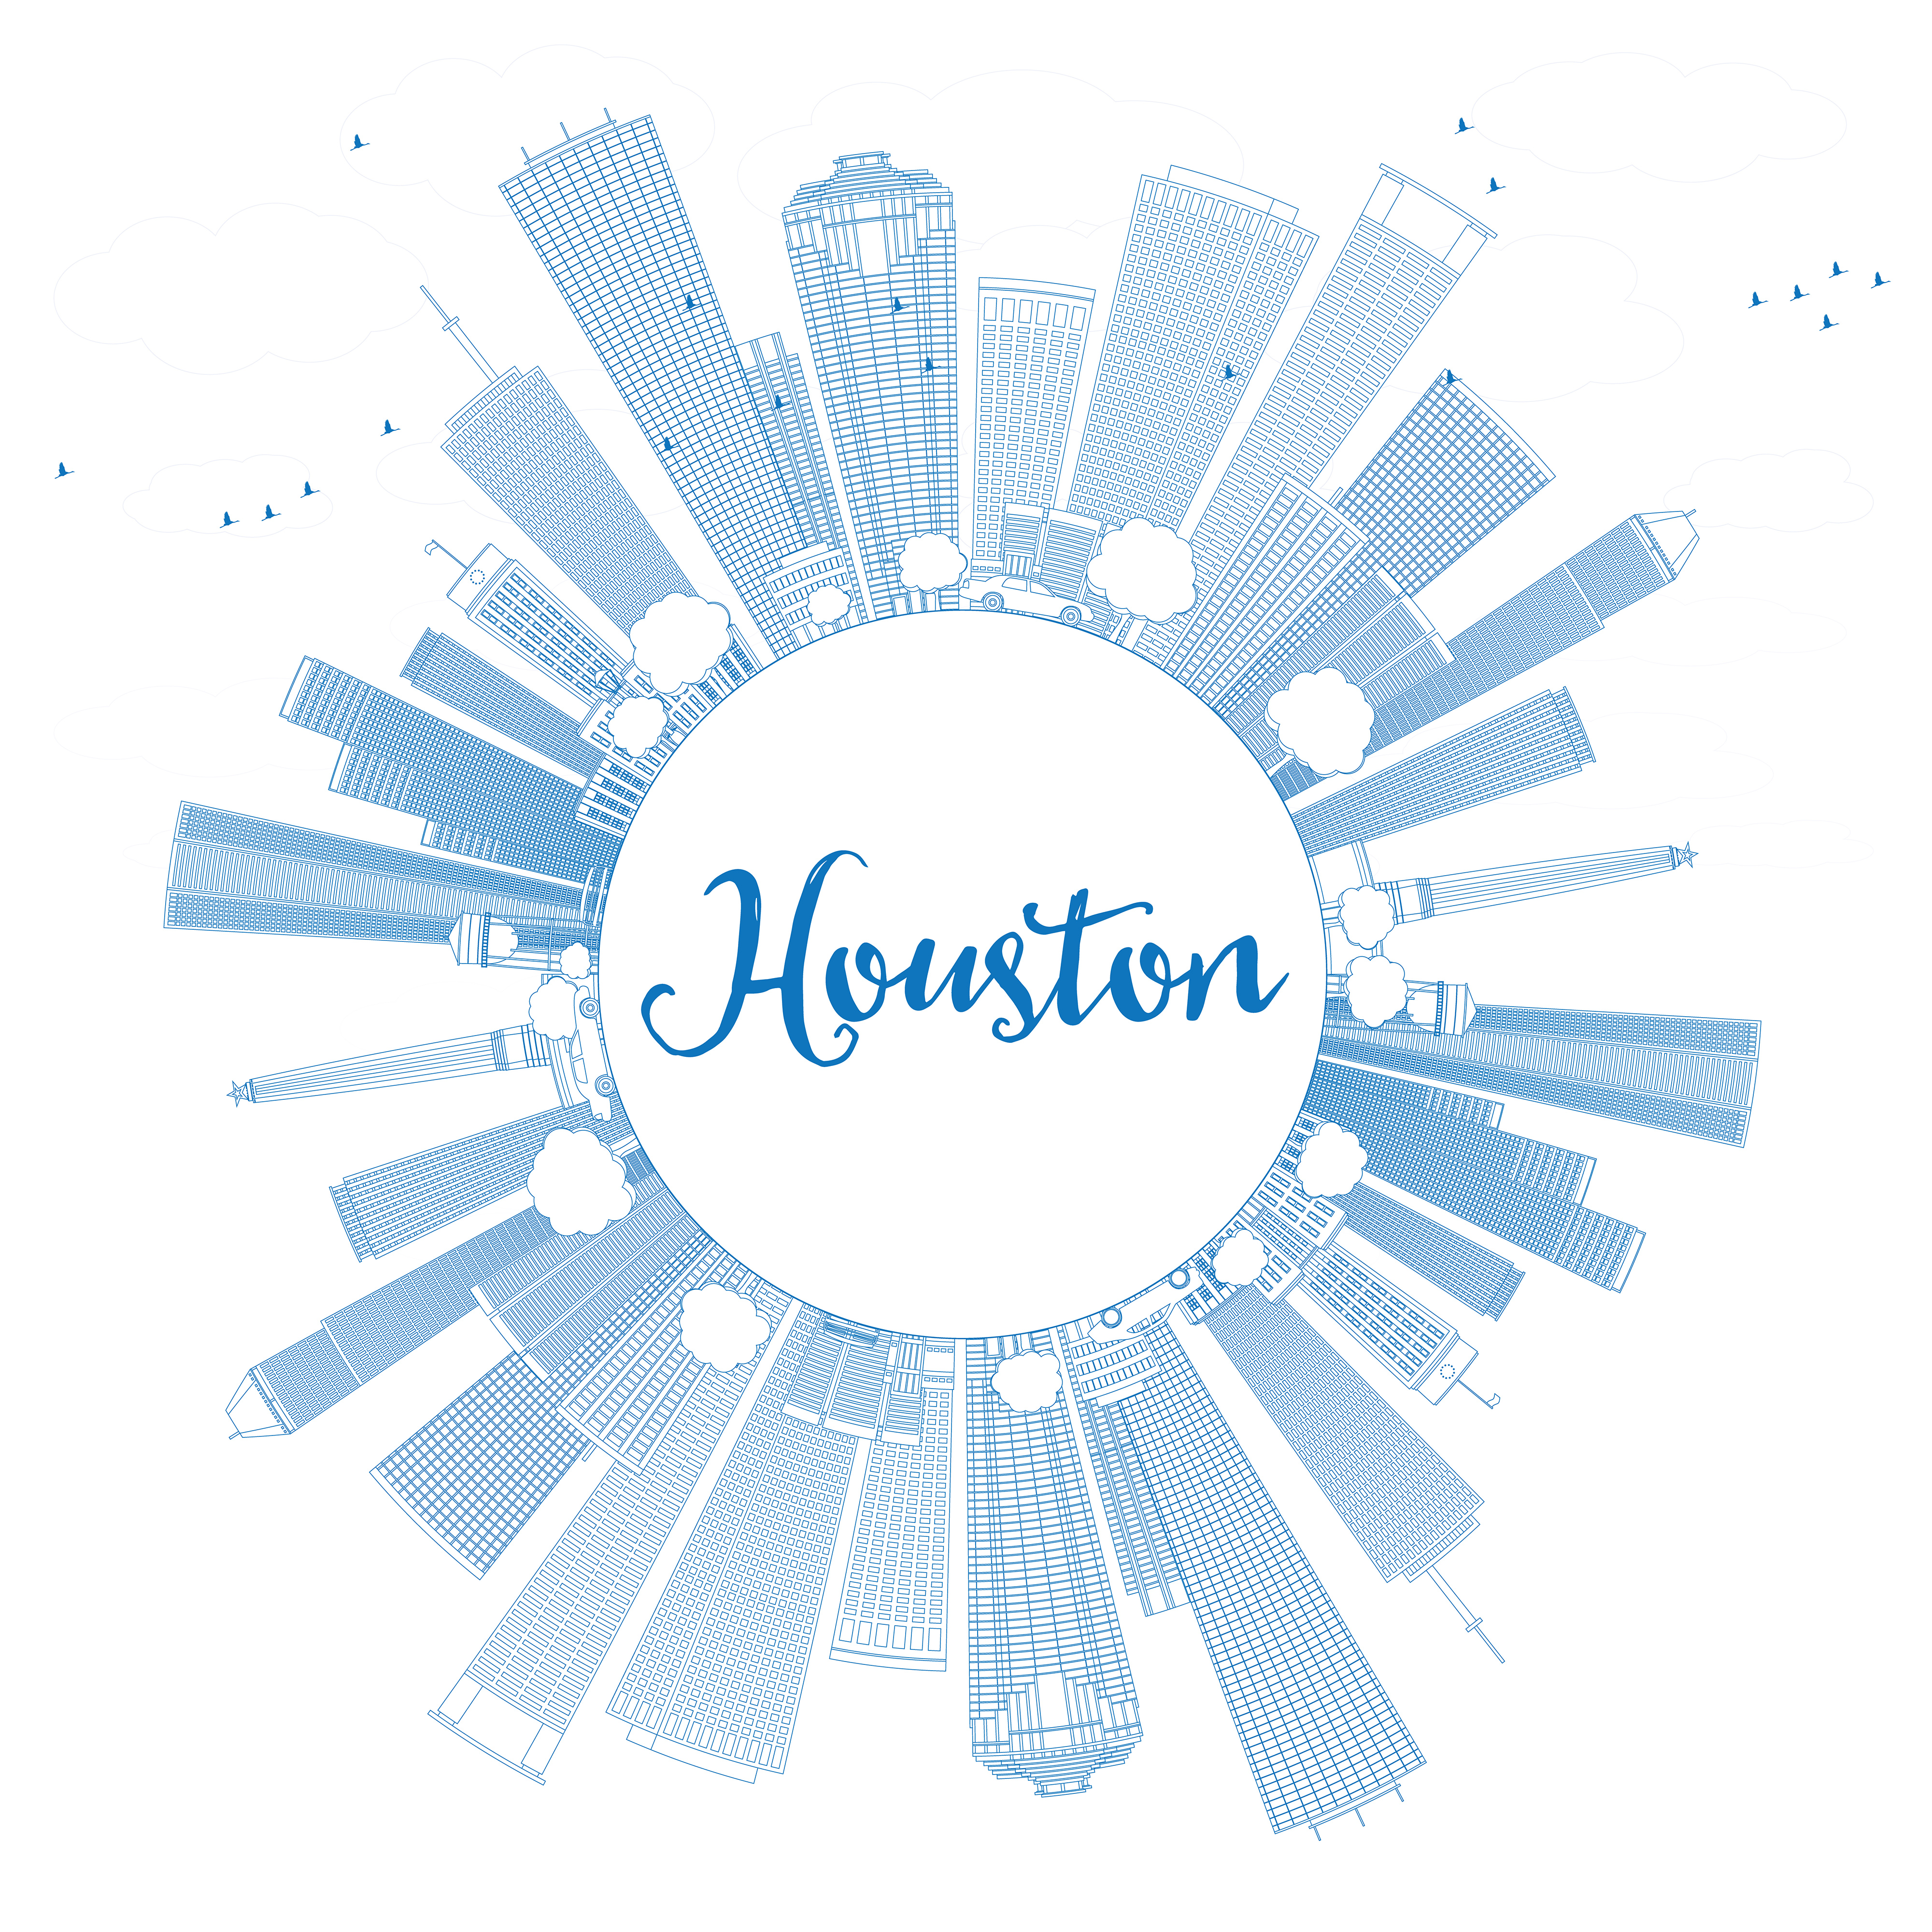 Circular depiction of the Houston, Texas city skyline.